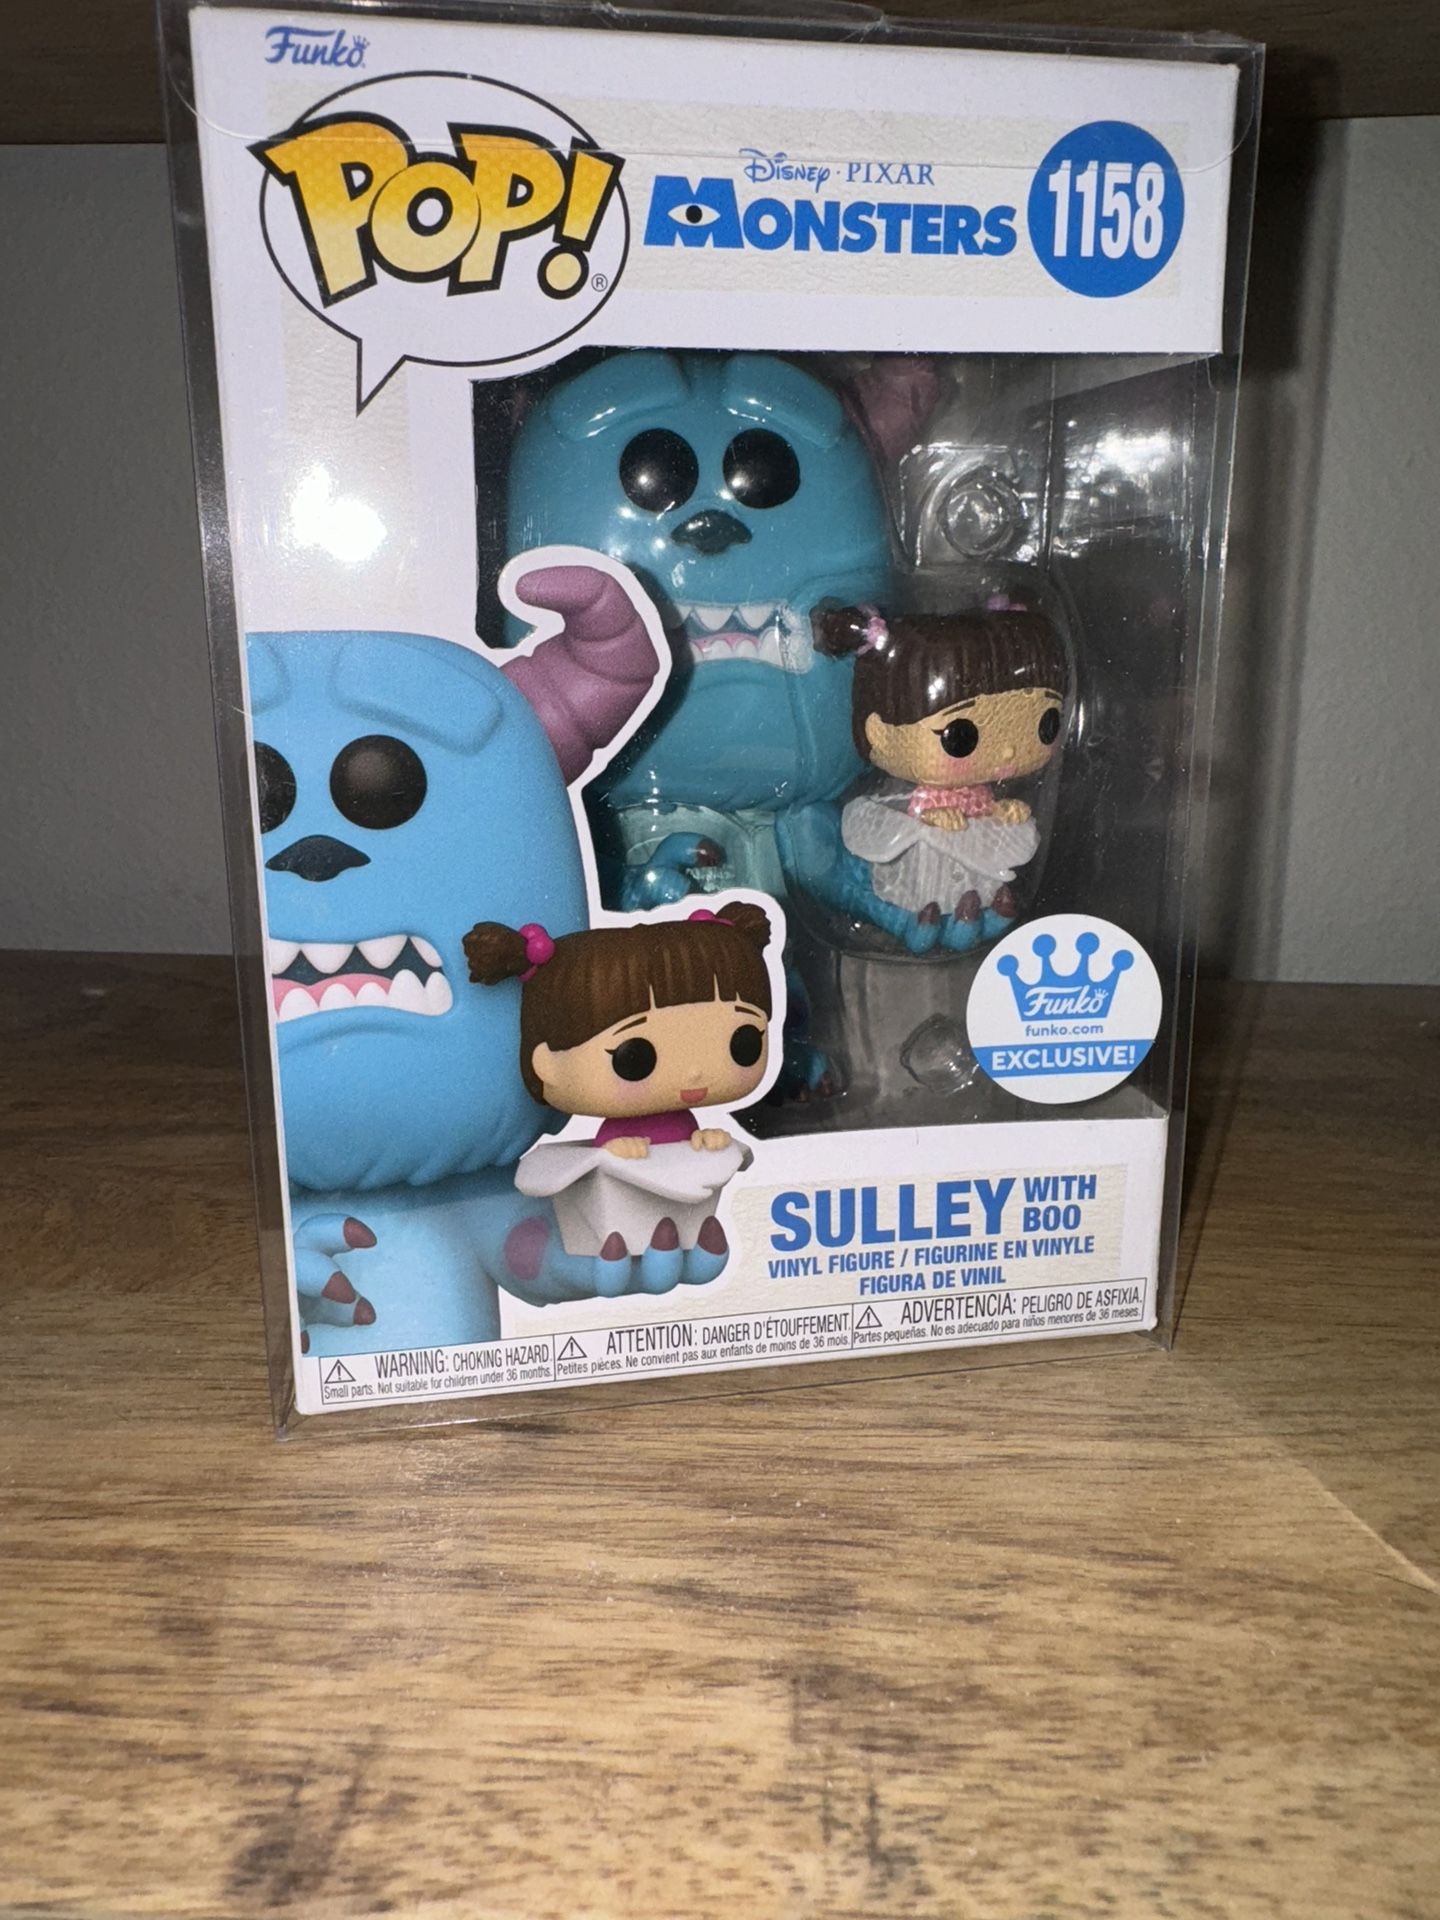 Funko Pop! Disney Pixar Monsters Inc 1158 Sulley with Boo Funko Shop Exclusive